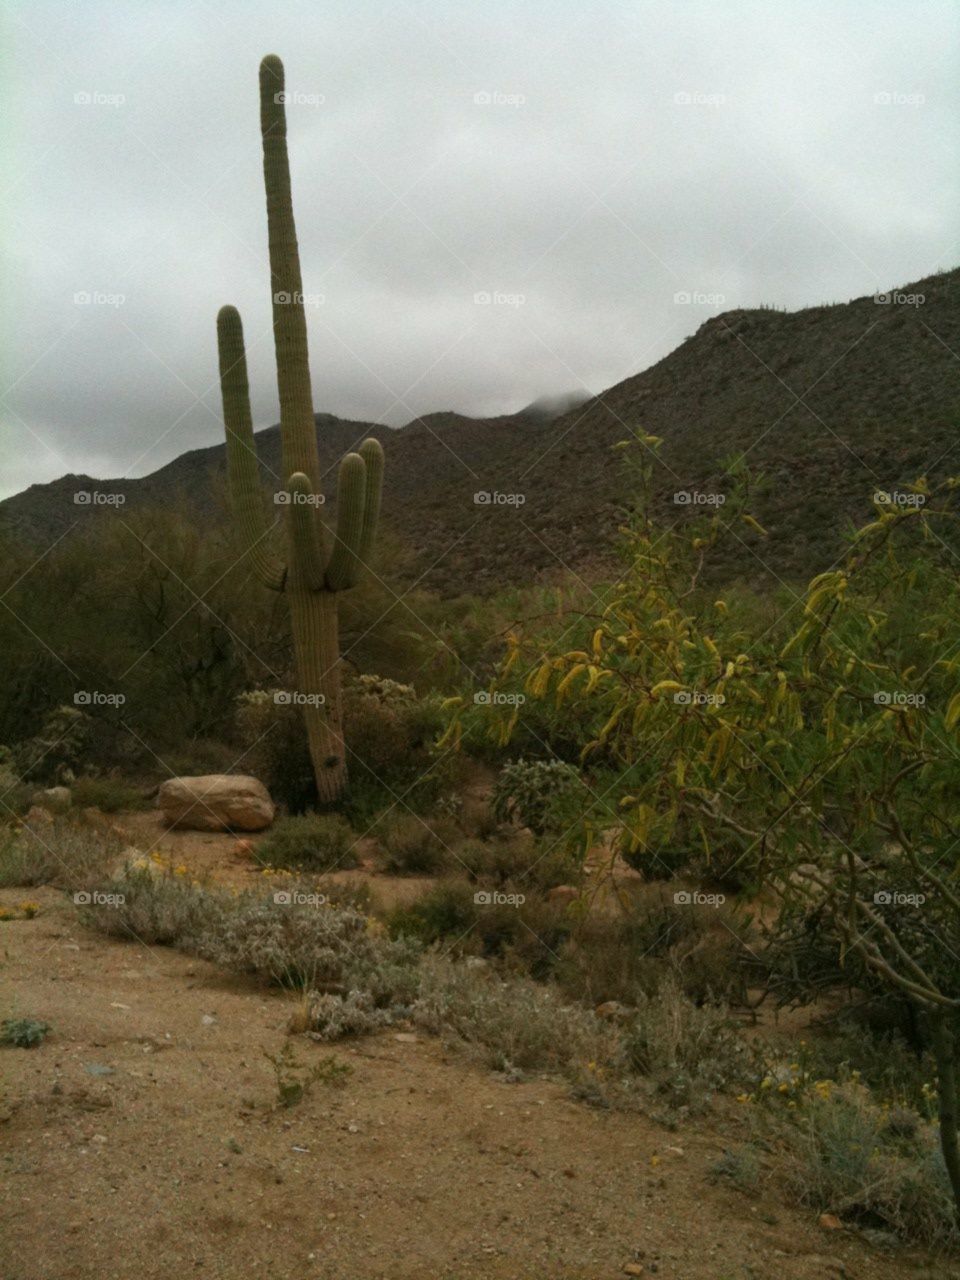 Arizona cactus